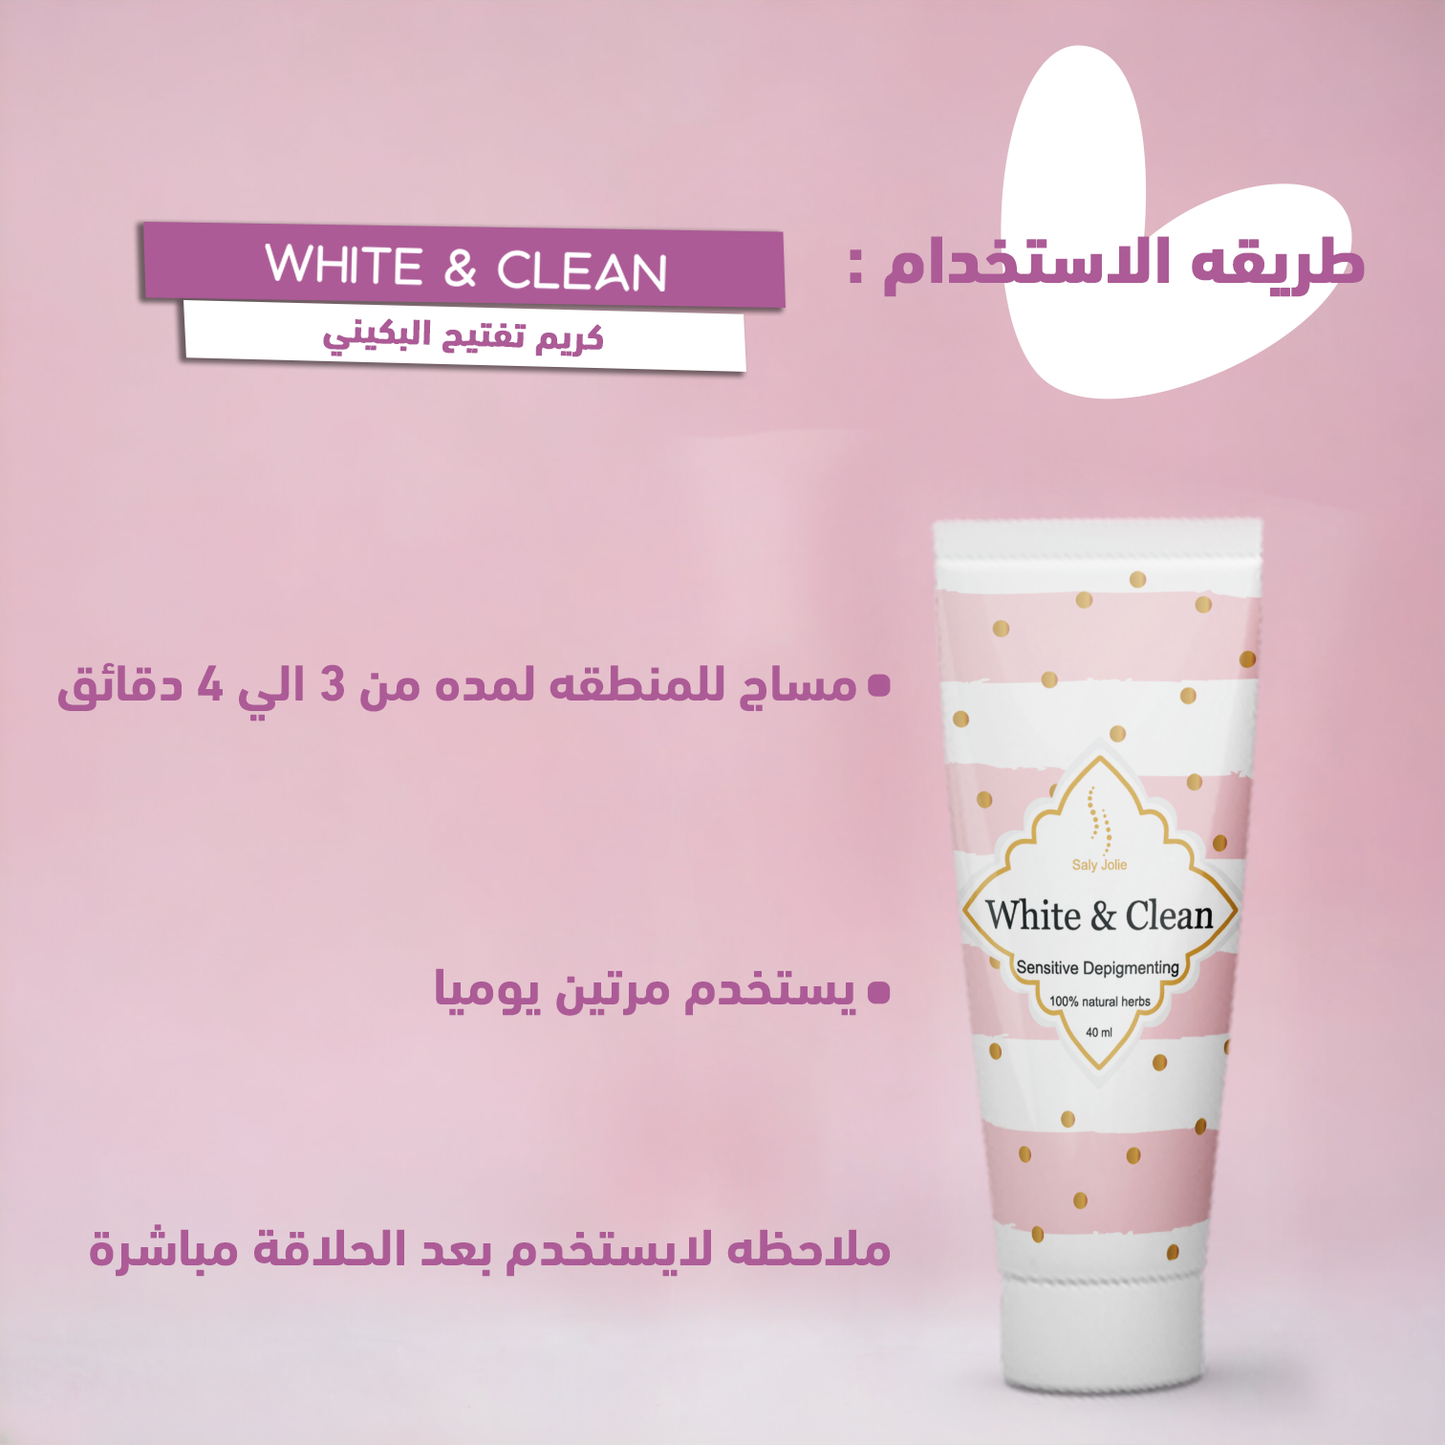 White & Clean Brighten, Daily whitening Bikini area & Ingrown Hair Treatment with Salicylic Acid and Niacinamide, SPF 50